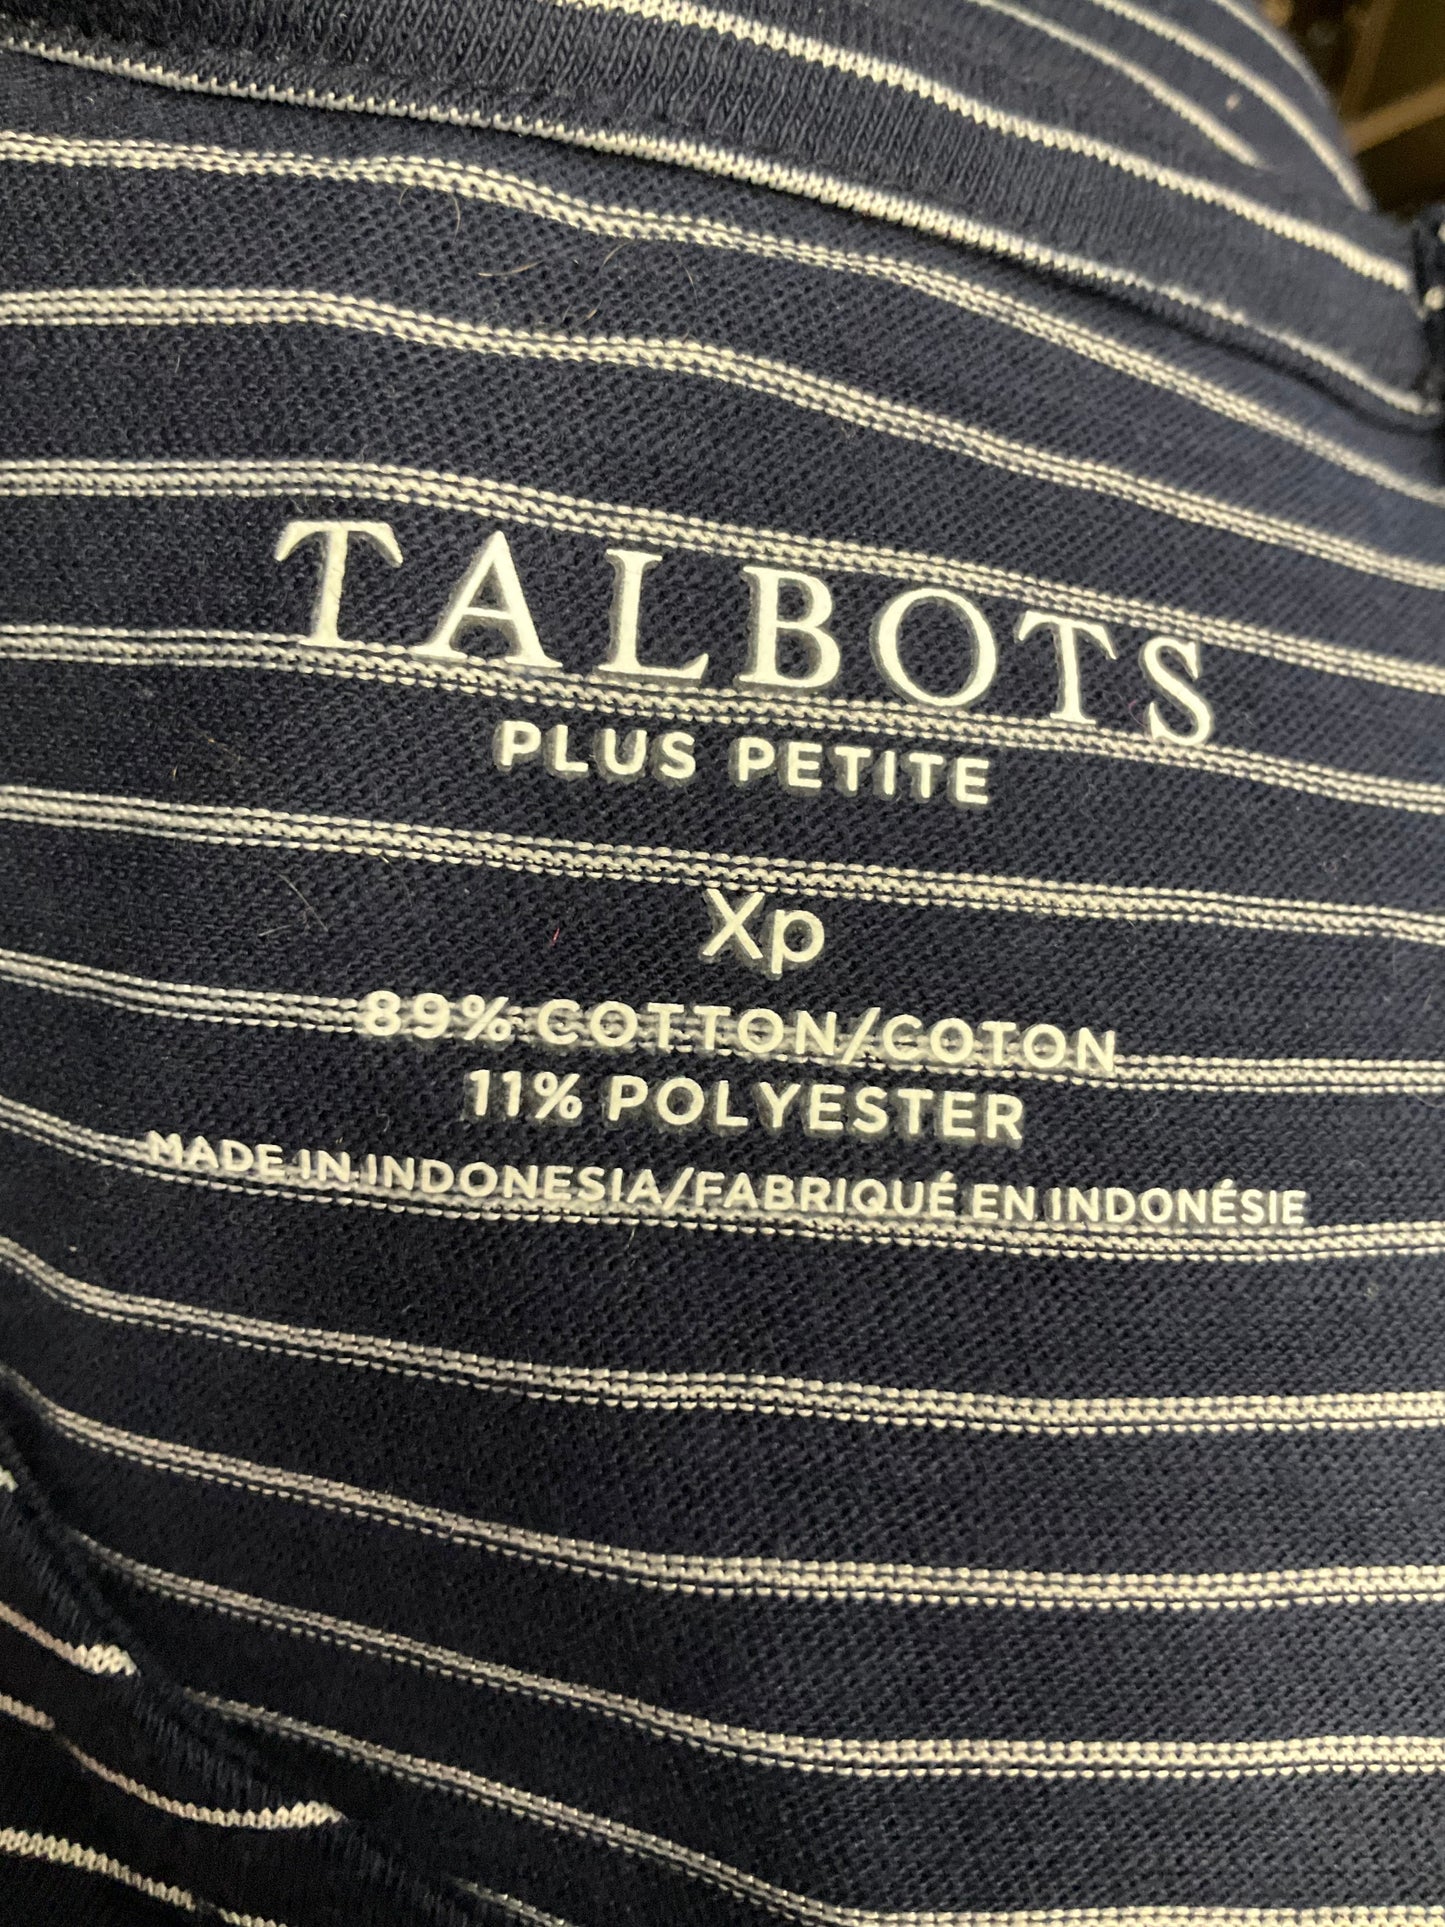 Blue & White Top Short Sleeve Talbots, Size Xl